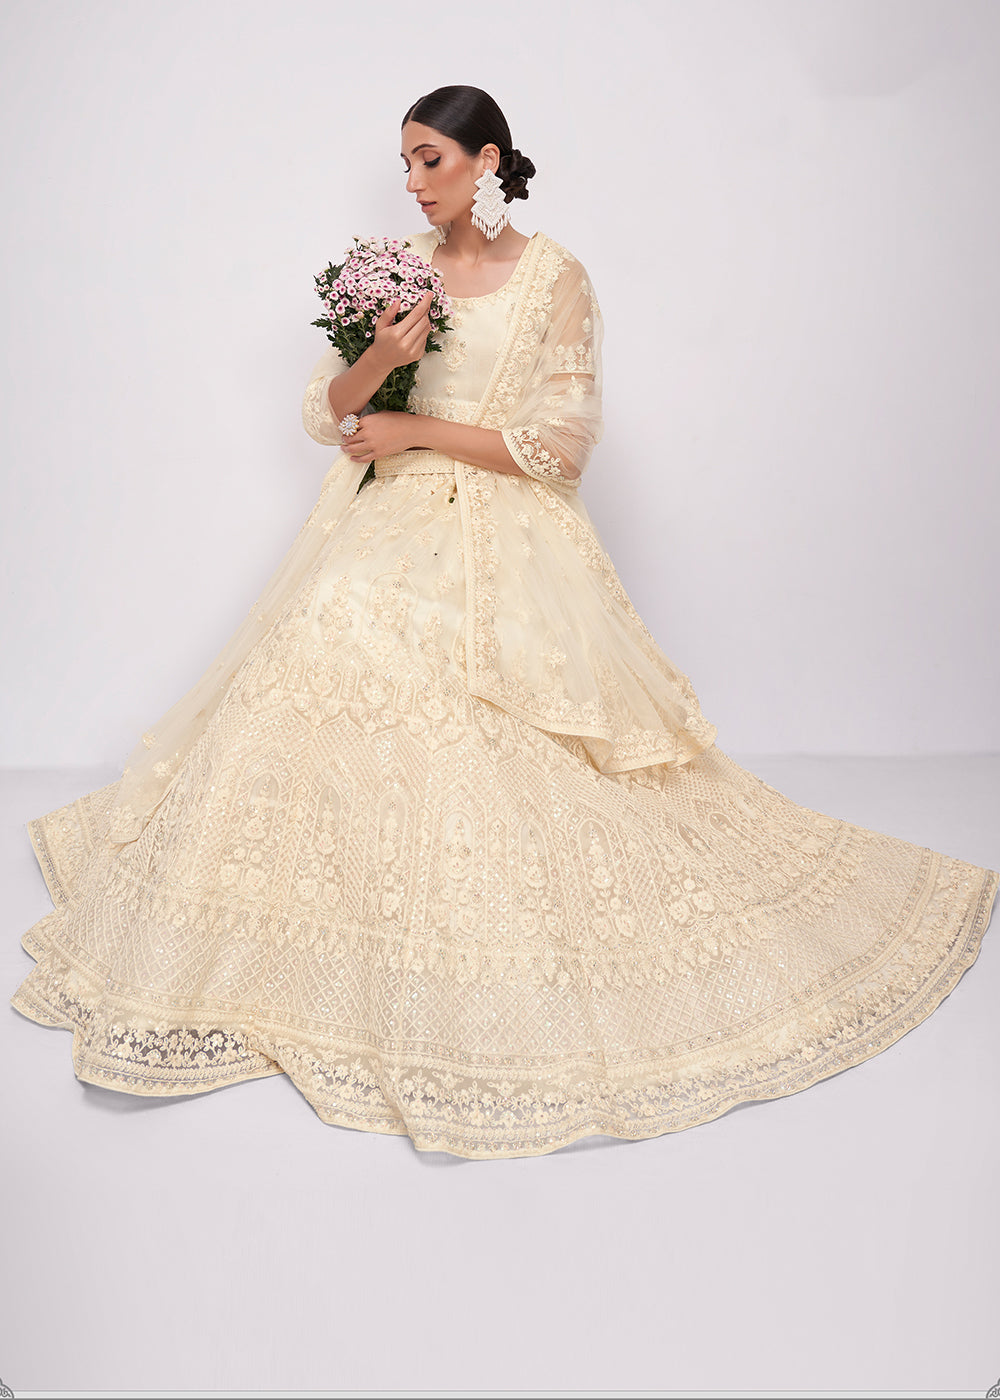 Buy Now Classic Off White Cording Designer Wedding Bridal Lehenga Choli Online in Canada, UK, USA & Worldwide at Empress Clothing.